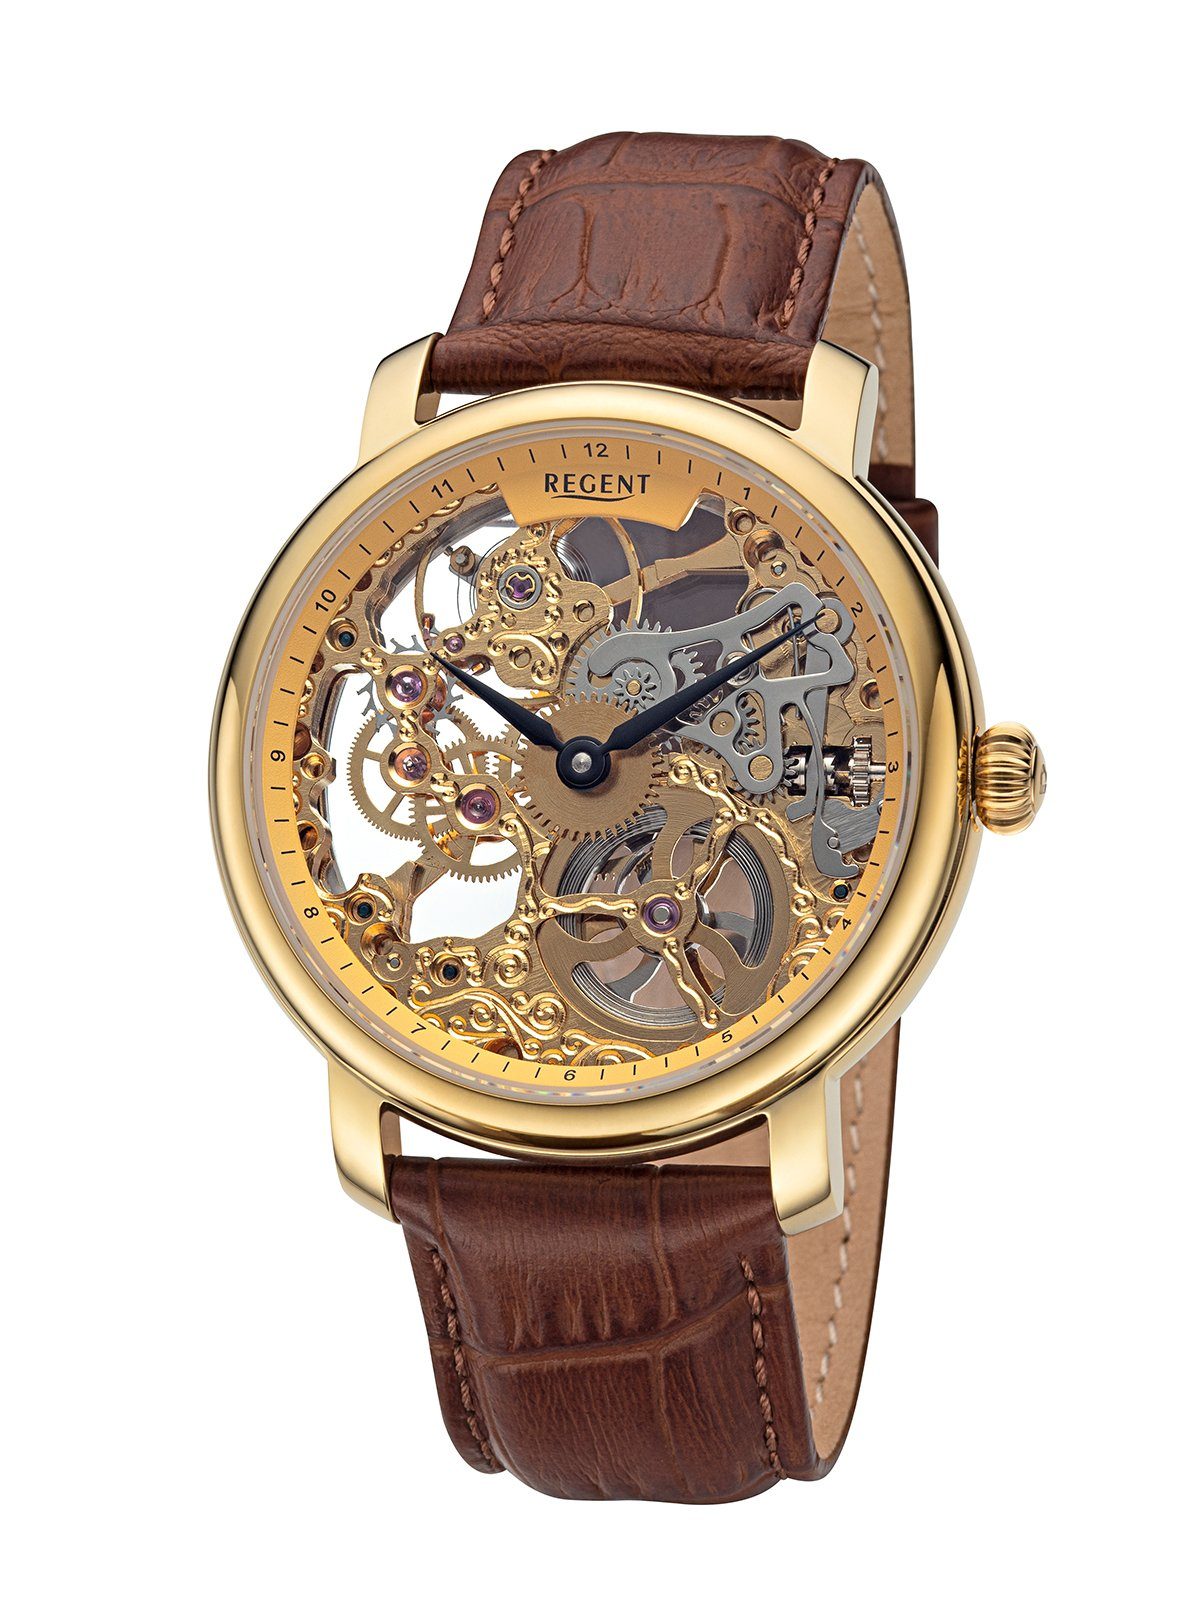 Regent Mechanische Lederband Skelett-Uhrwerk, gold GM-2205, in Made Handaufzug, Germany Uhr